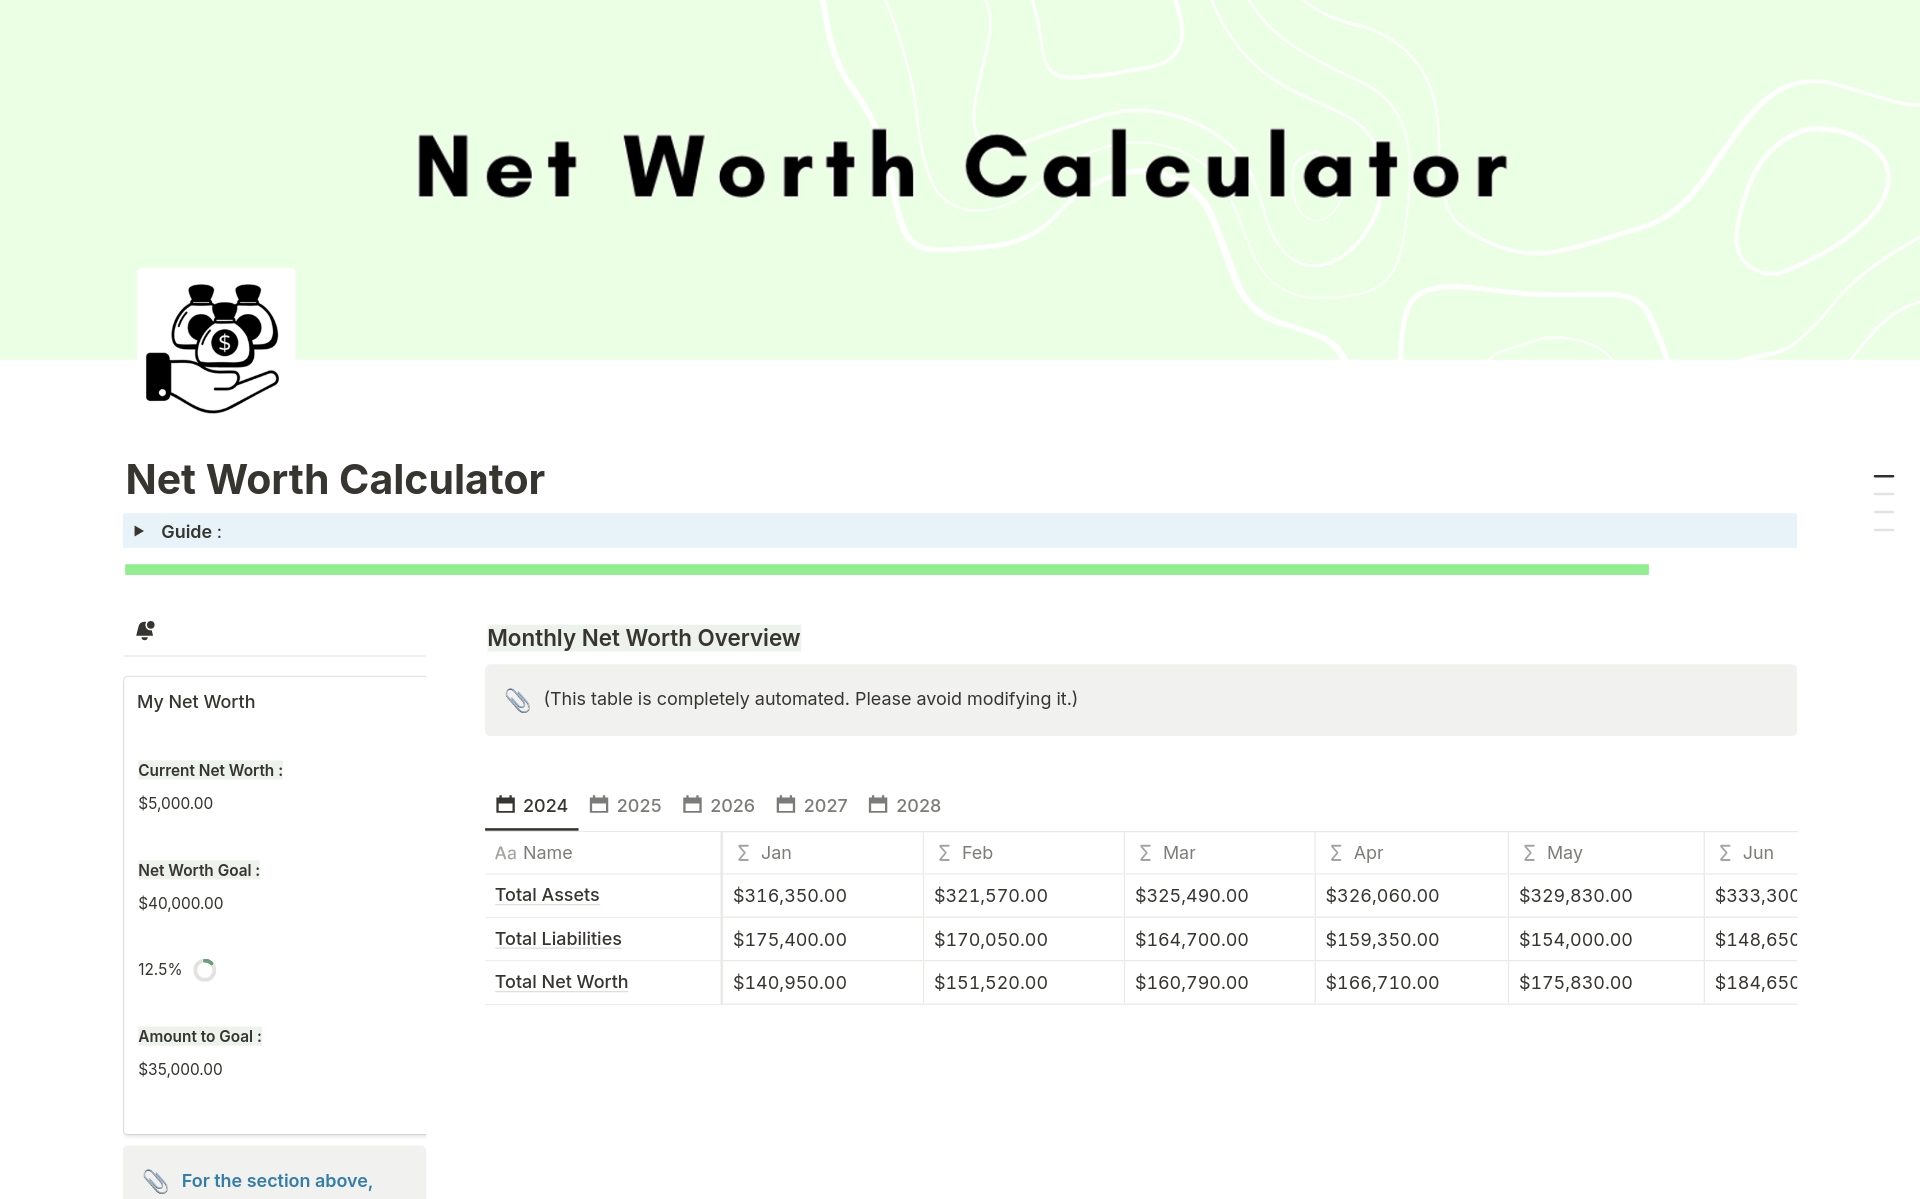 Vista previa de plantilla para Net Worth Calculator